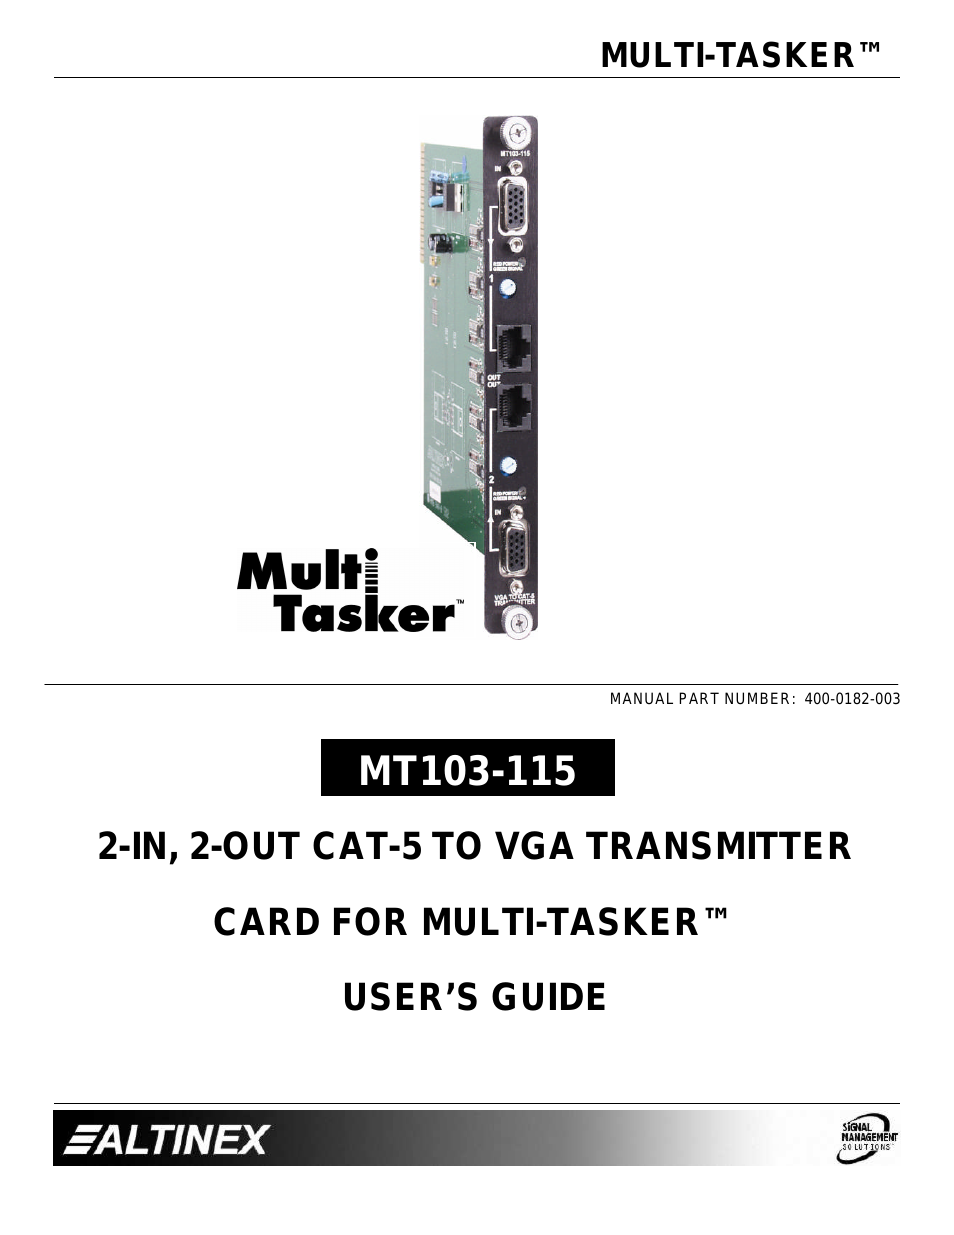 VGA to CAT-5 Transmitter Card MT103-115